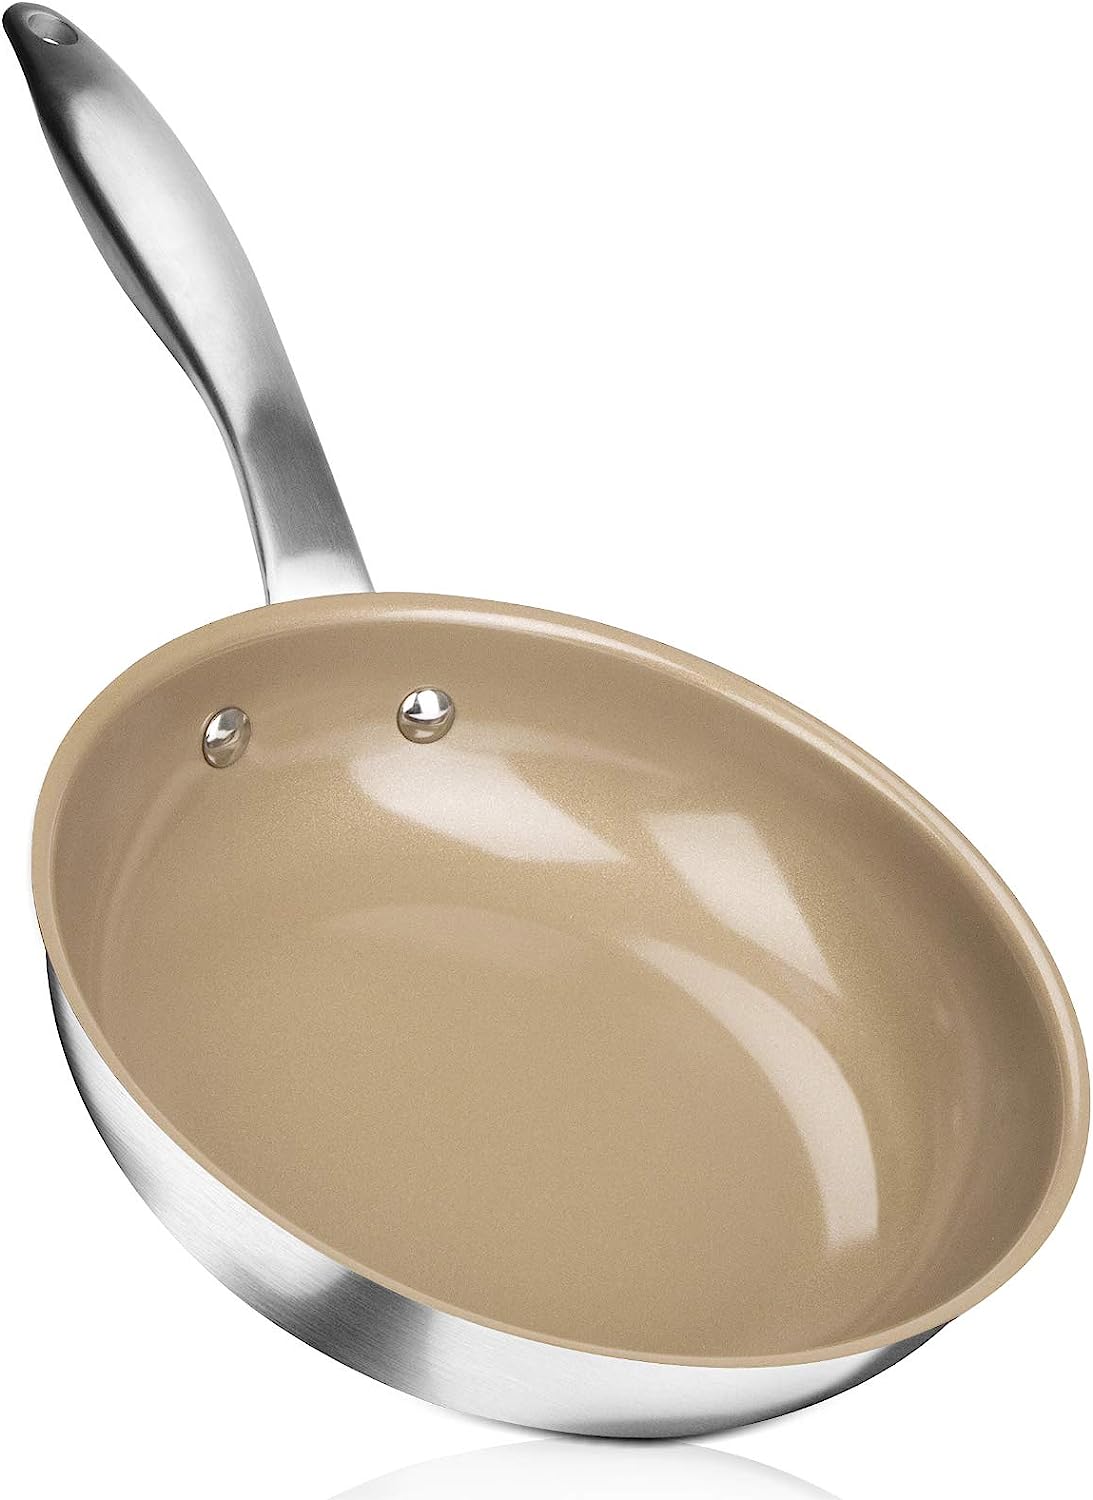 Duxtop Ceramic Non-stick Frying Pan, Stainless Steel [...]